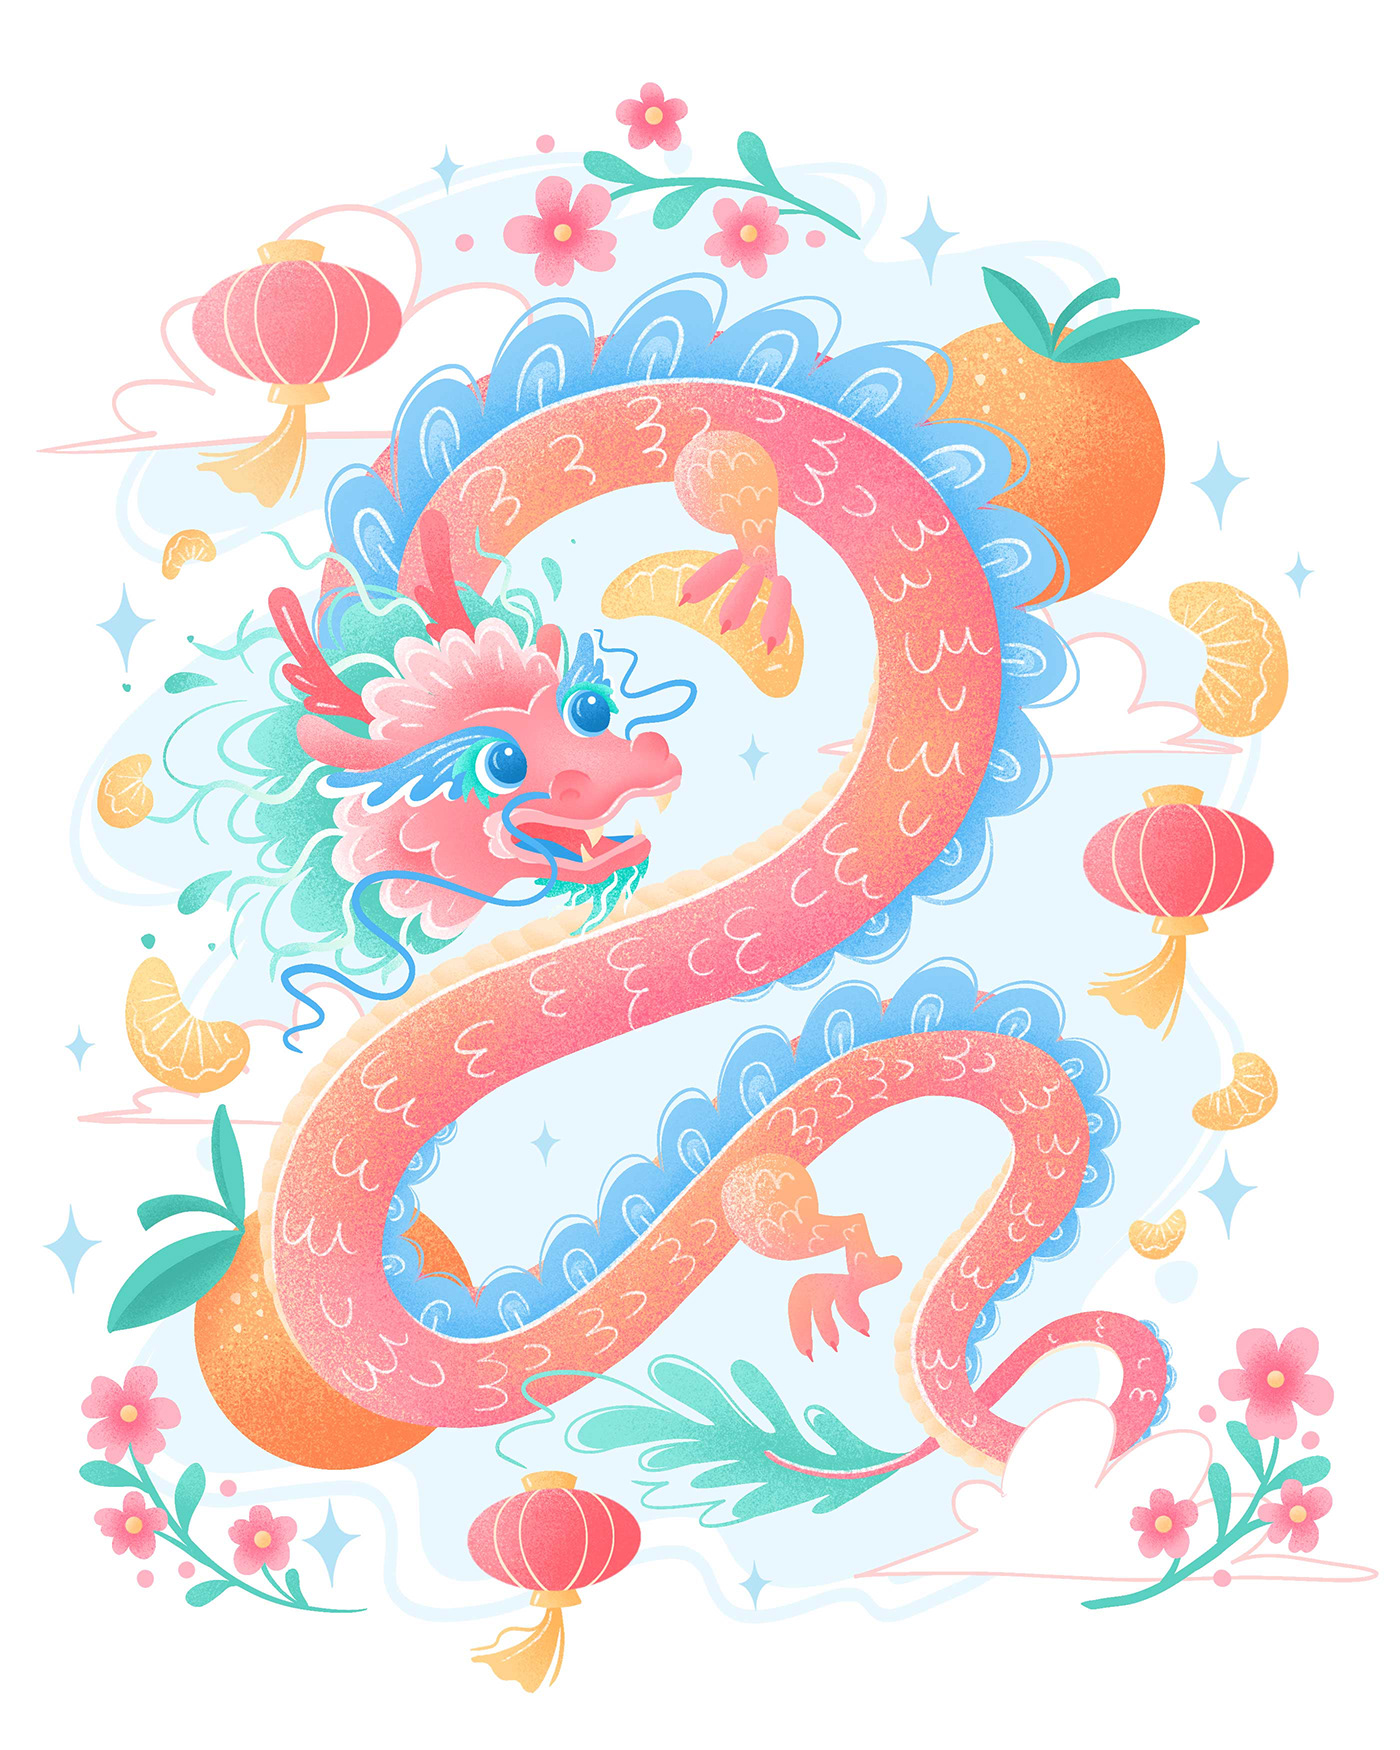 Vibrant Chinese dragon holding a mandarin orange slice. Surrounding it are lanterns, flowers, fruit